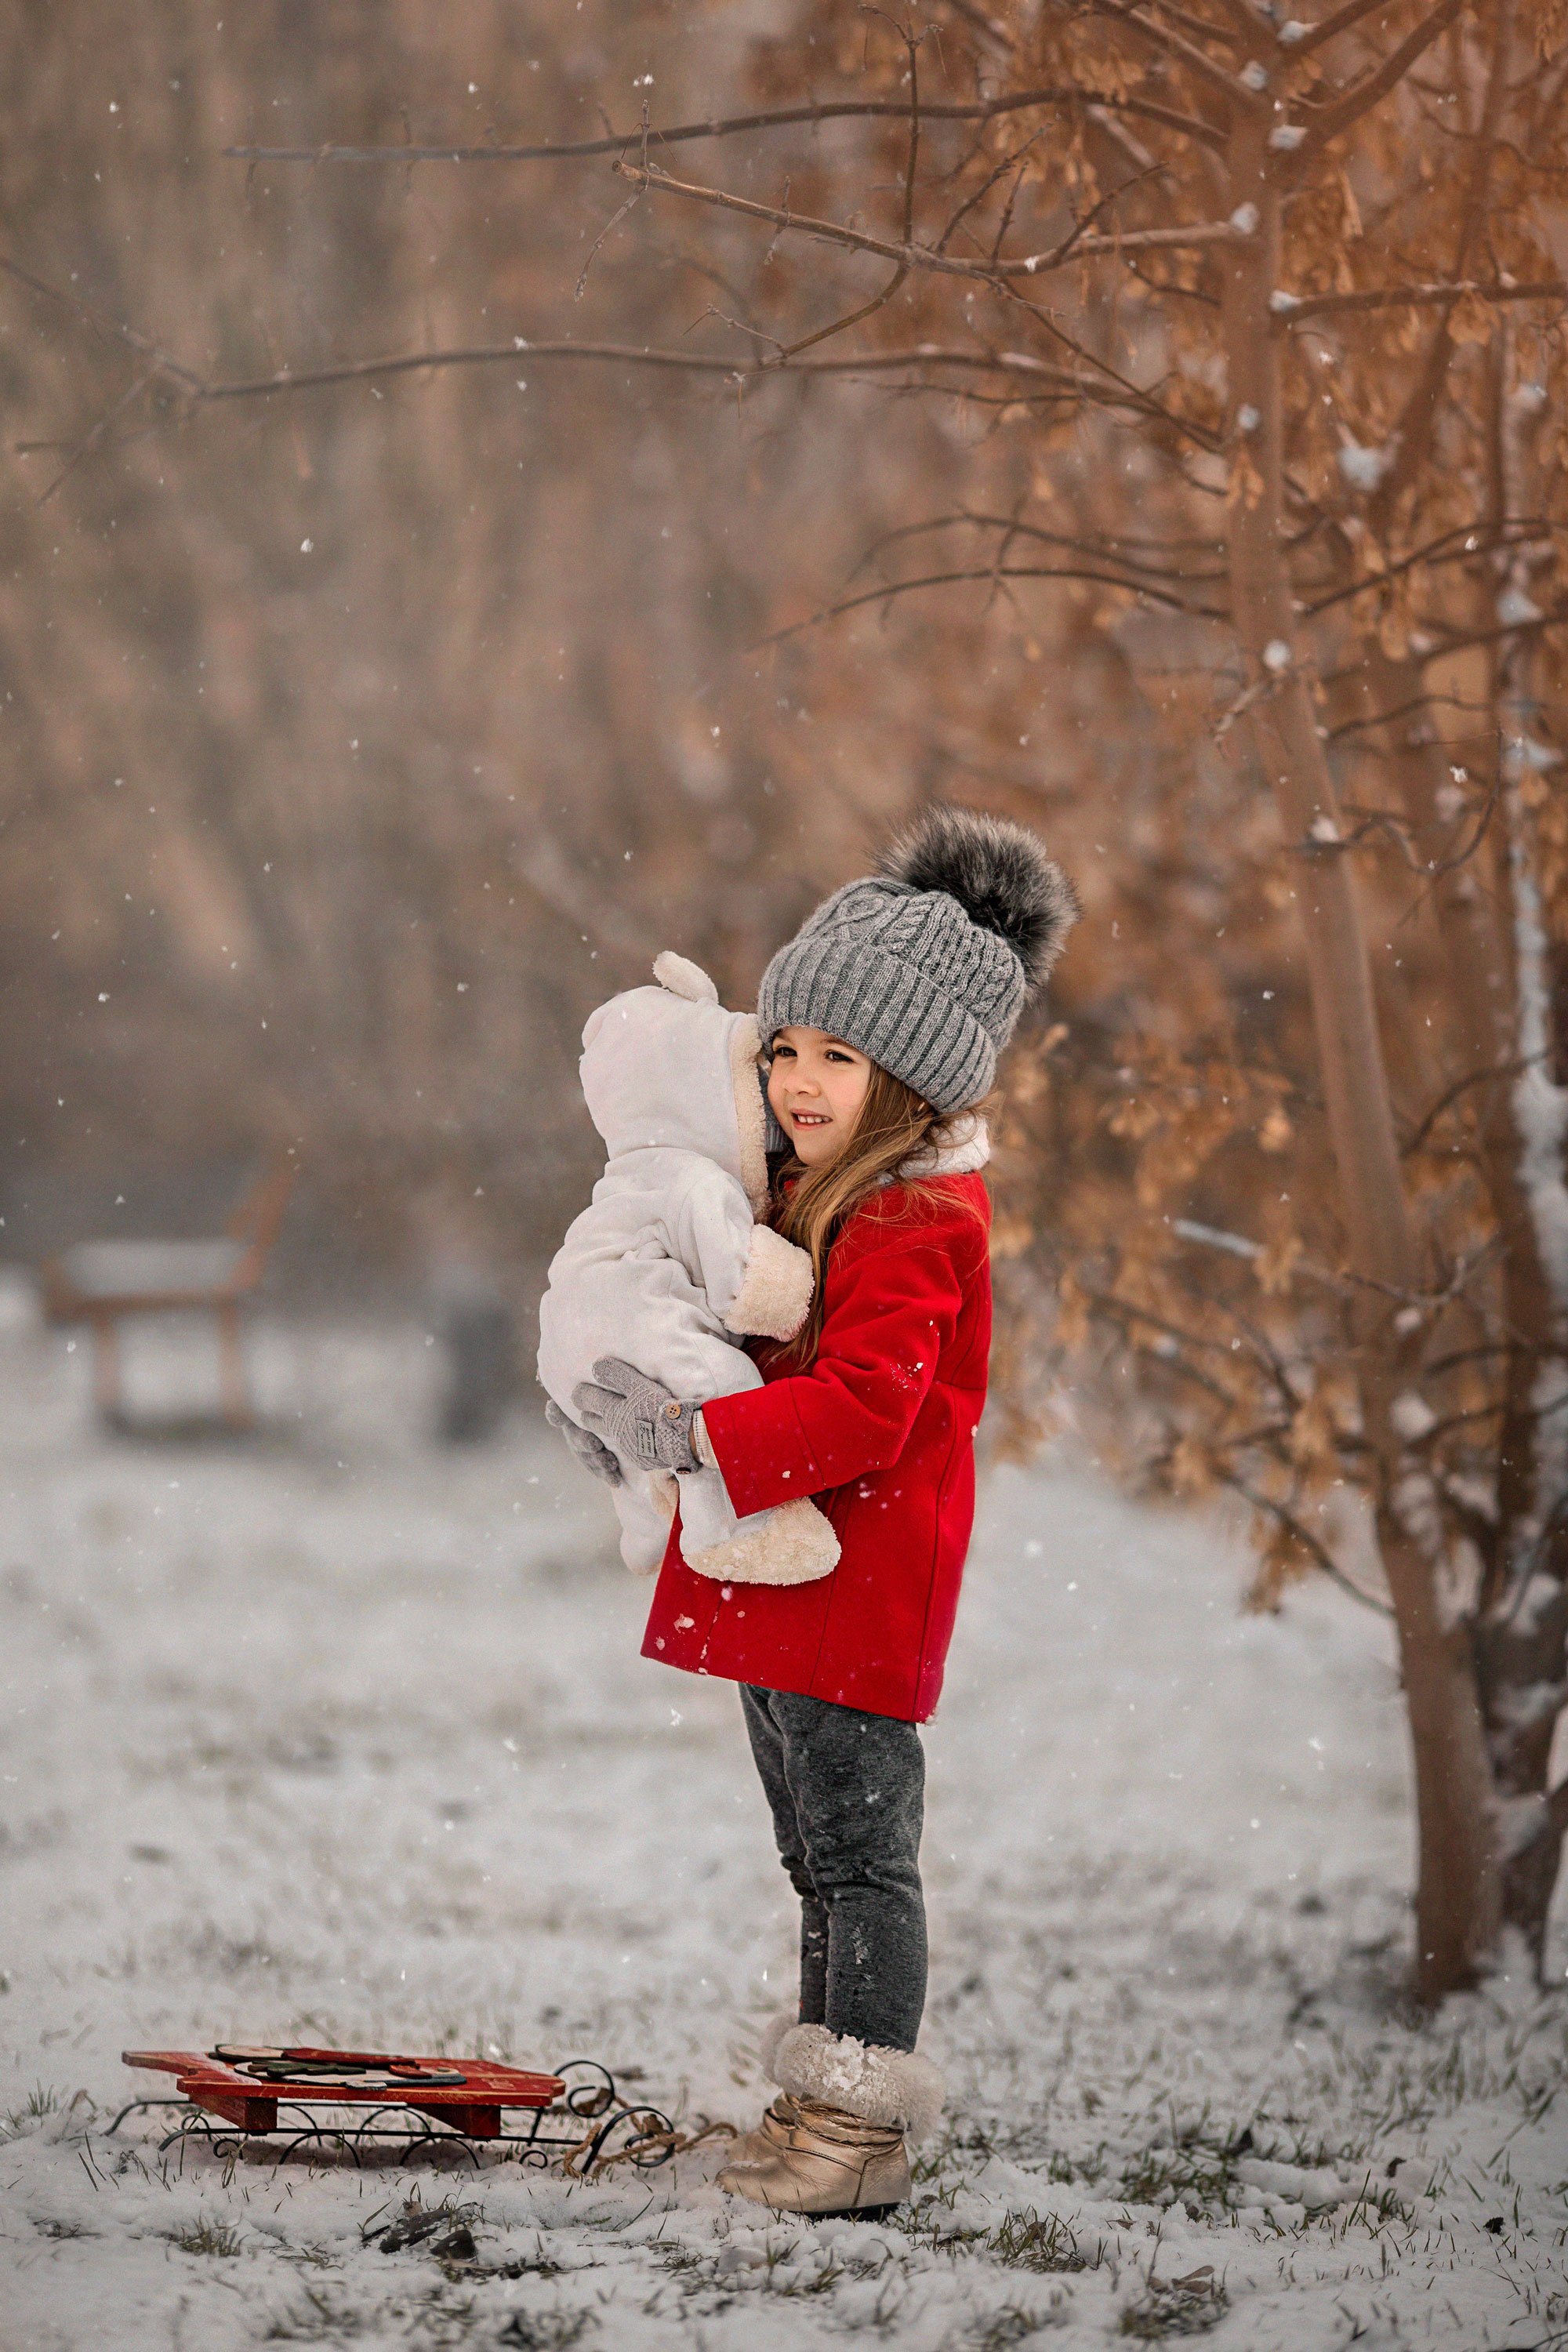 зима, зимнее фото, детское фото, детская фотография, кукла, санки, Александра Пименова